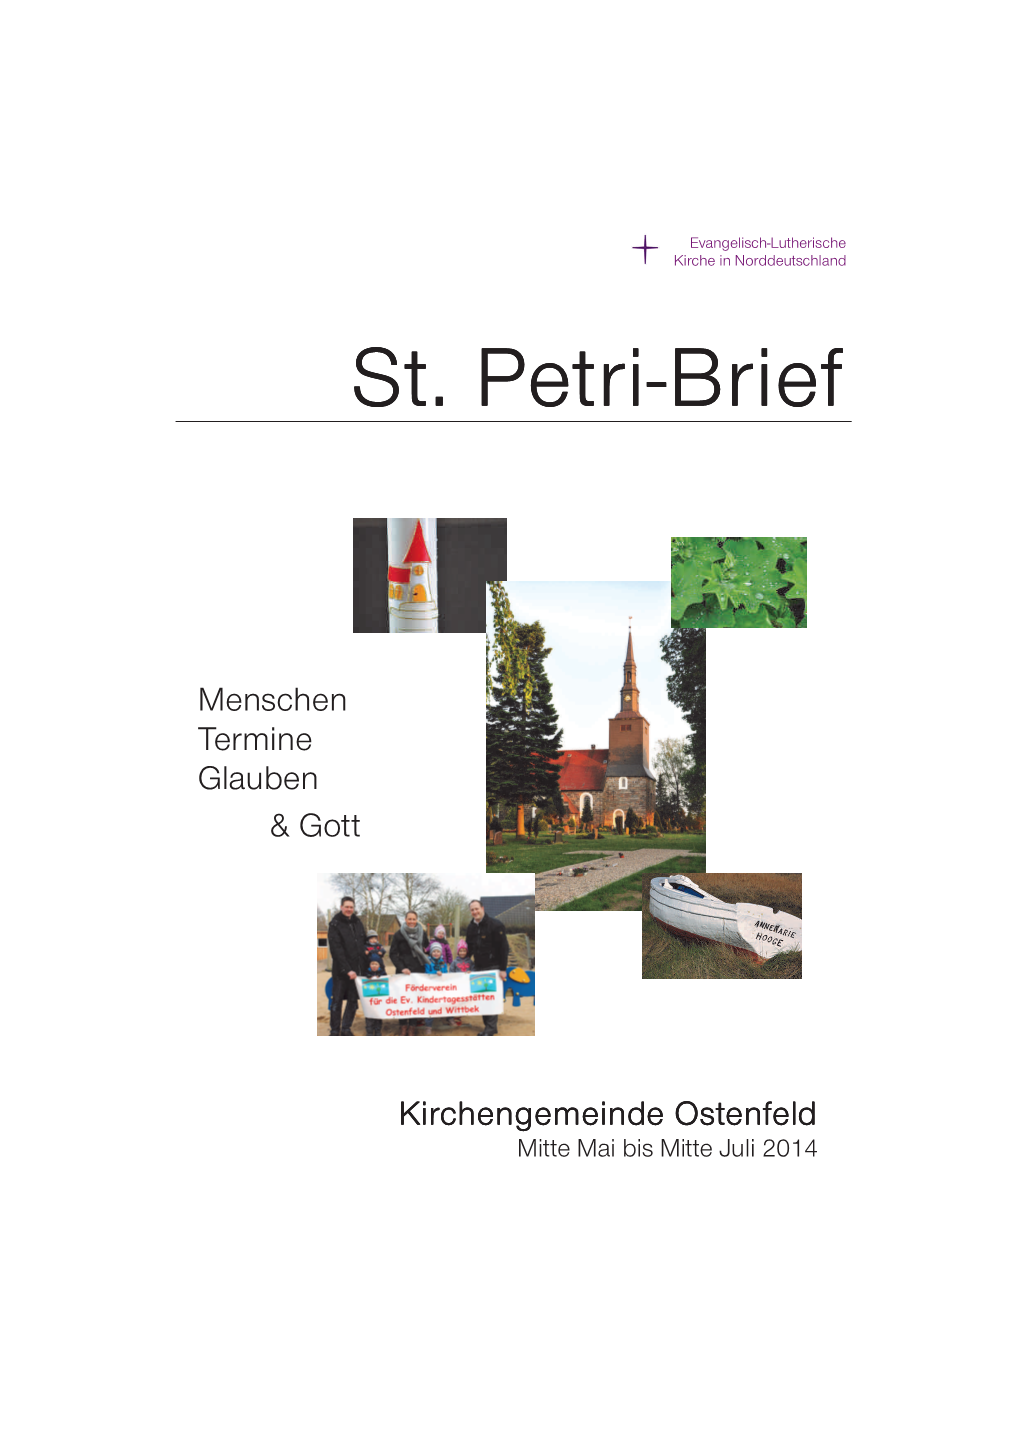 St. Petri St. Petri-Brief